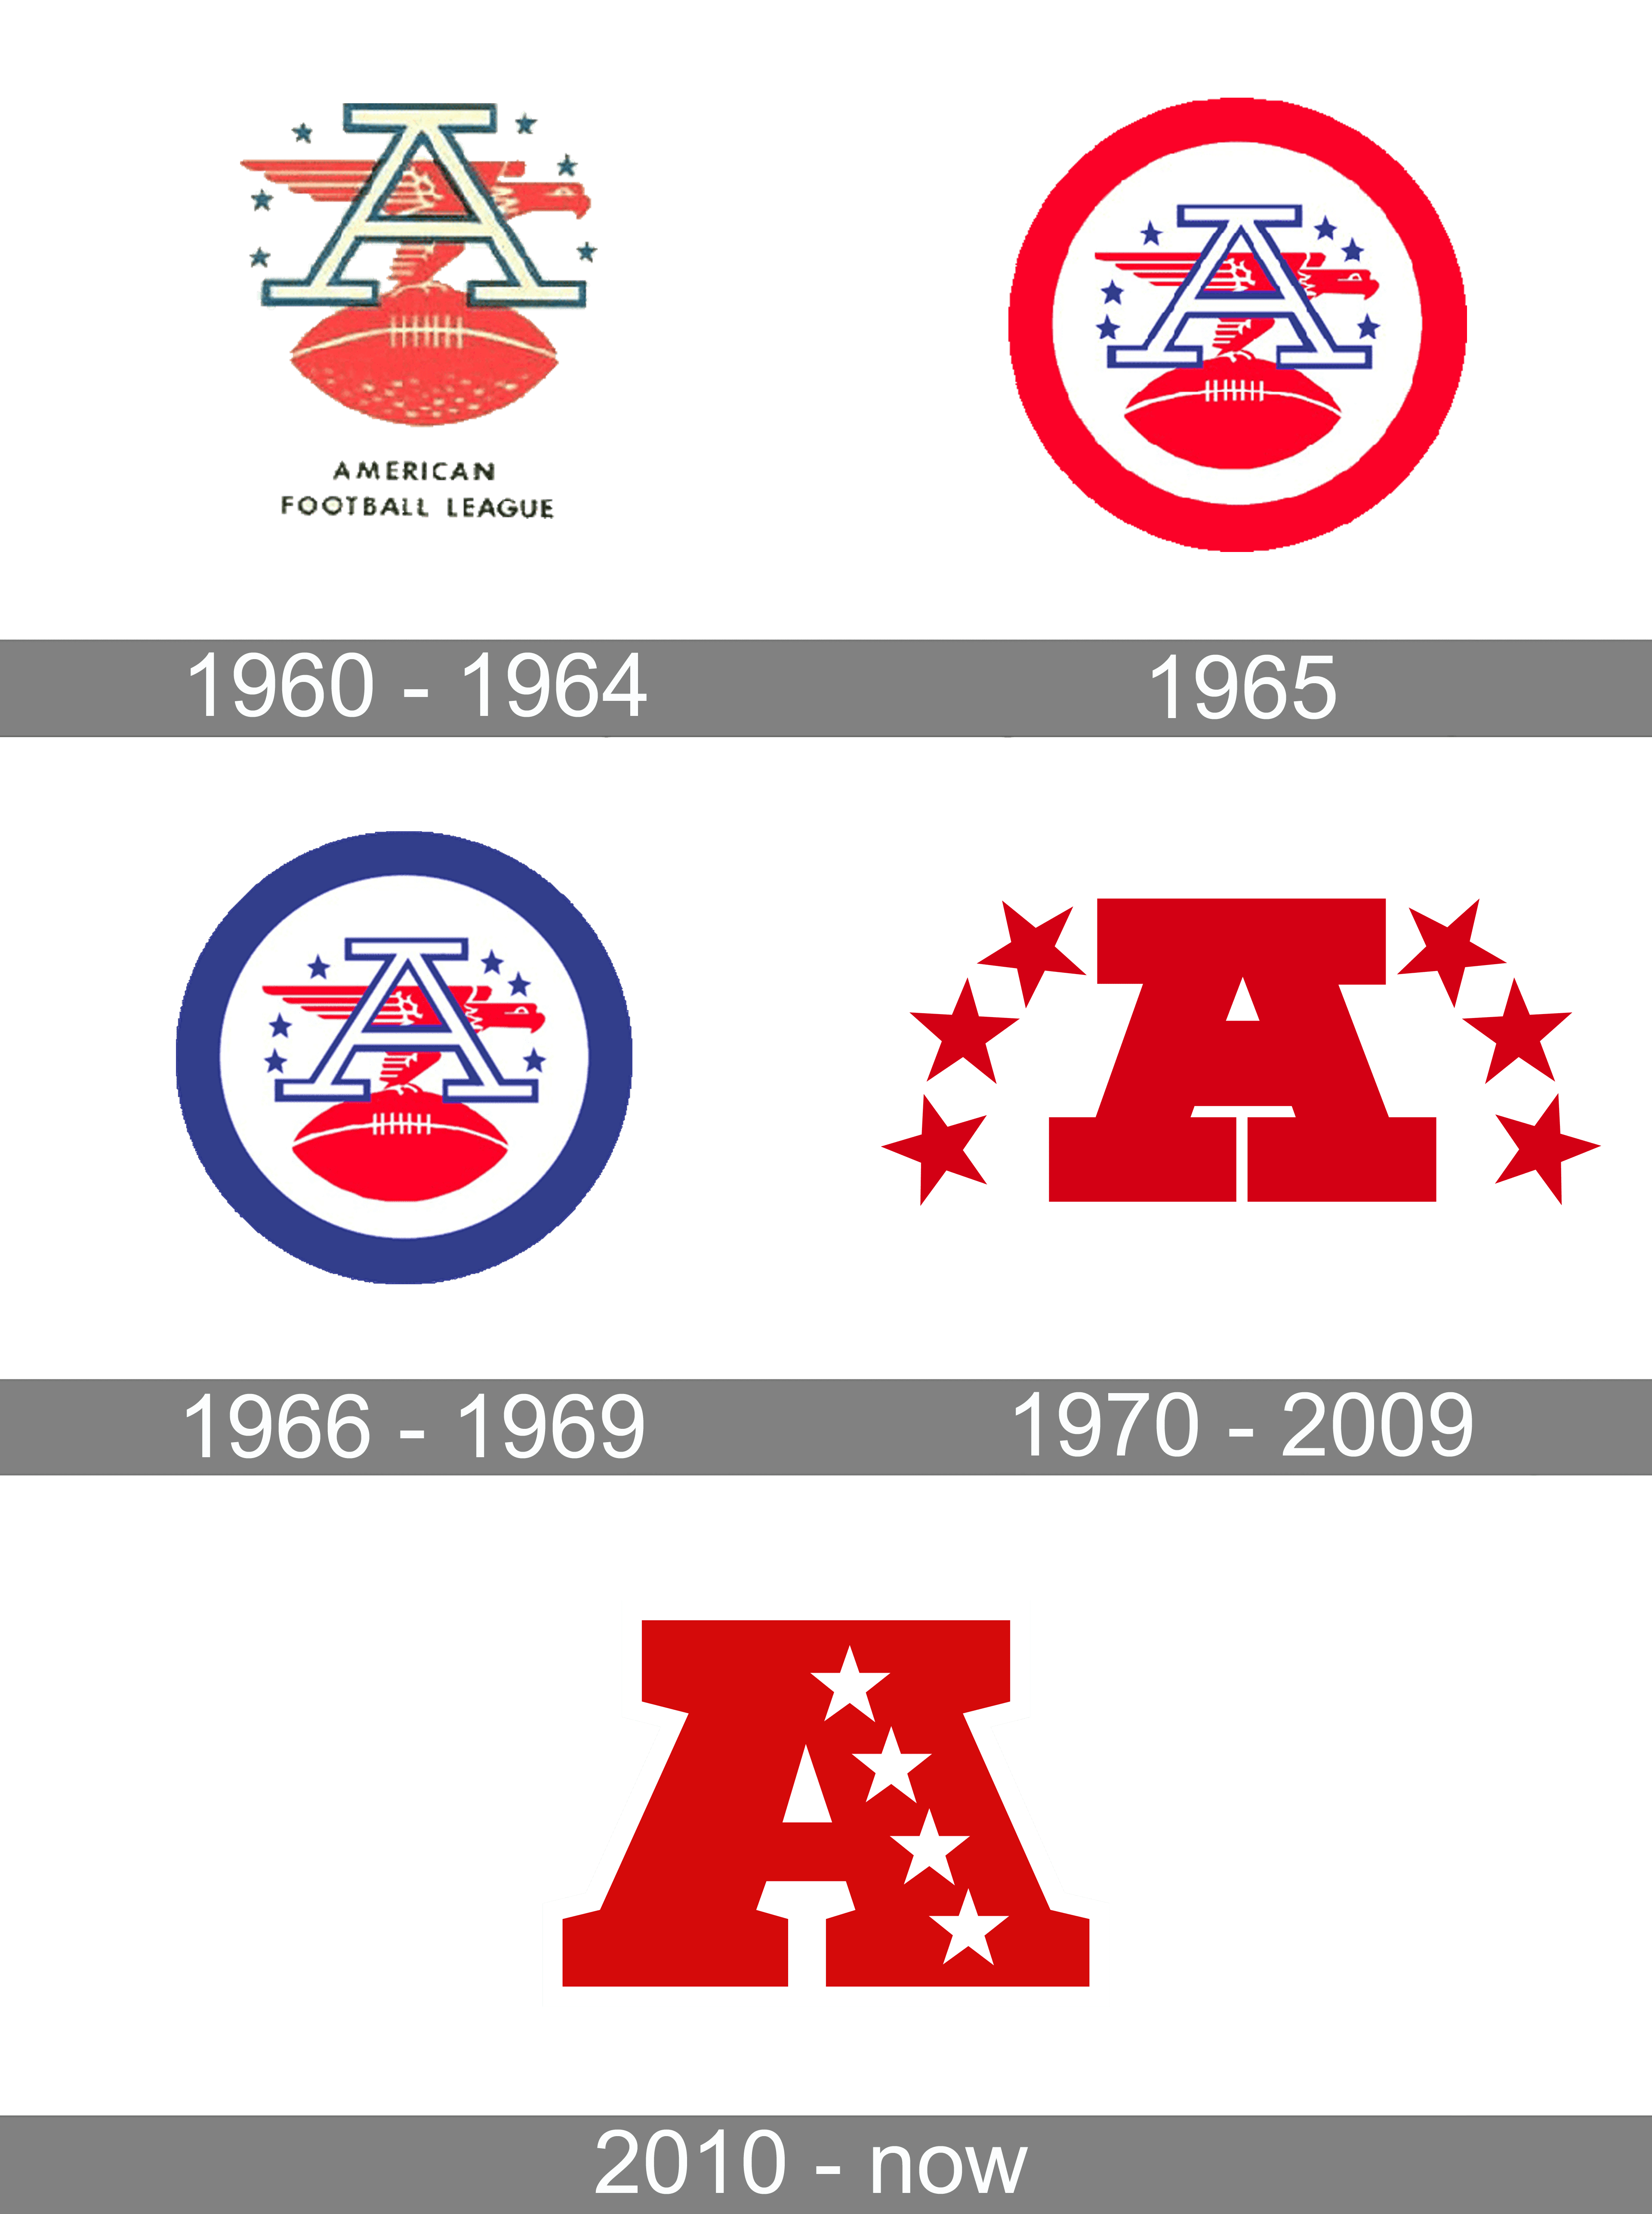 league of american football